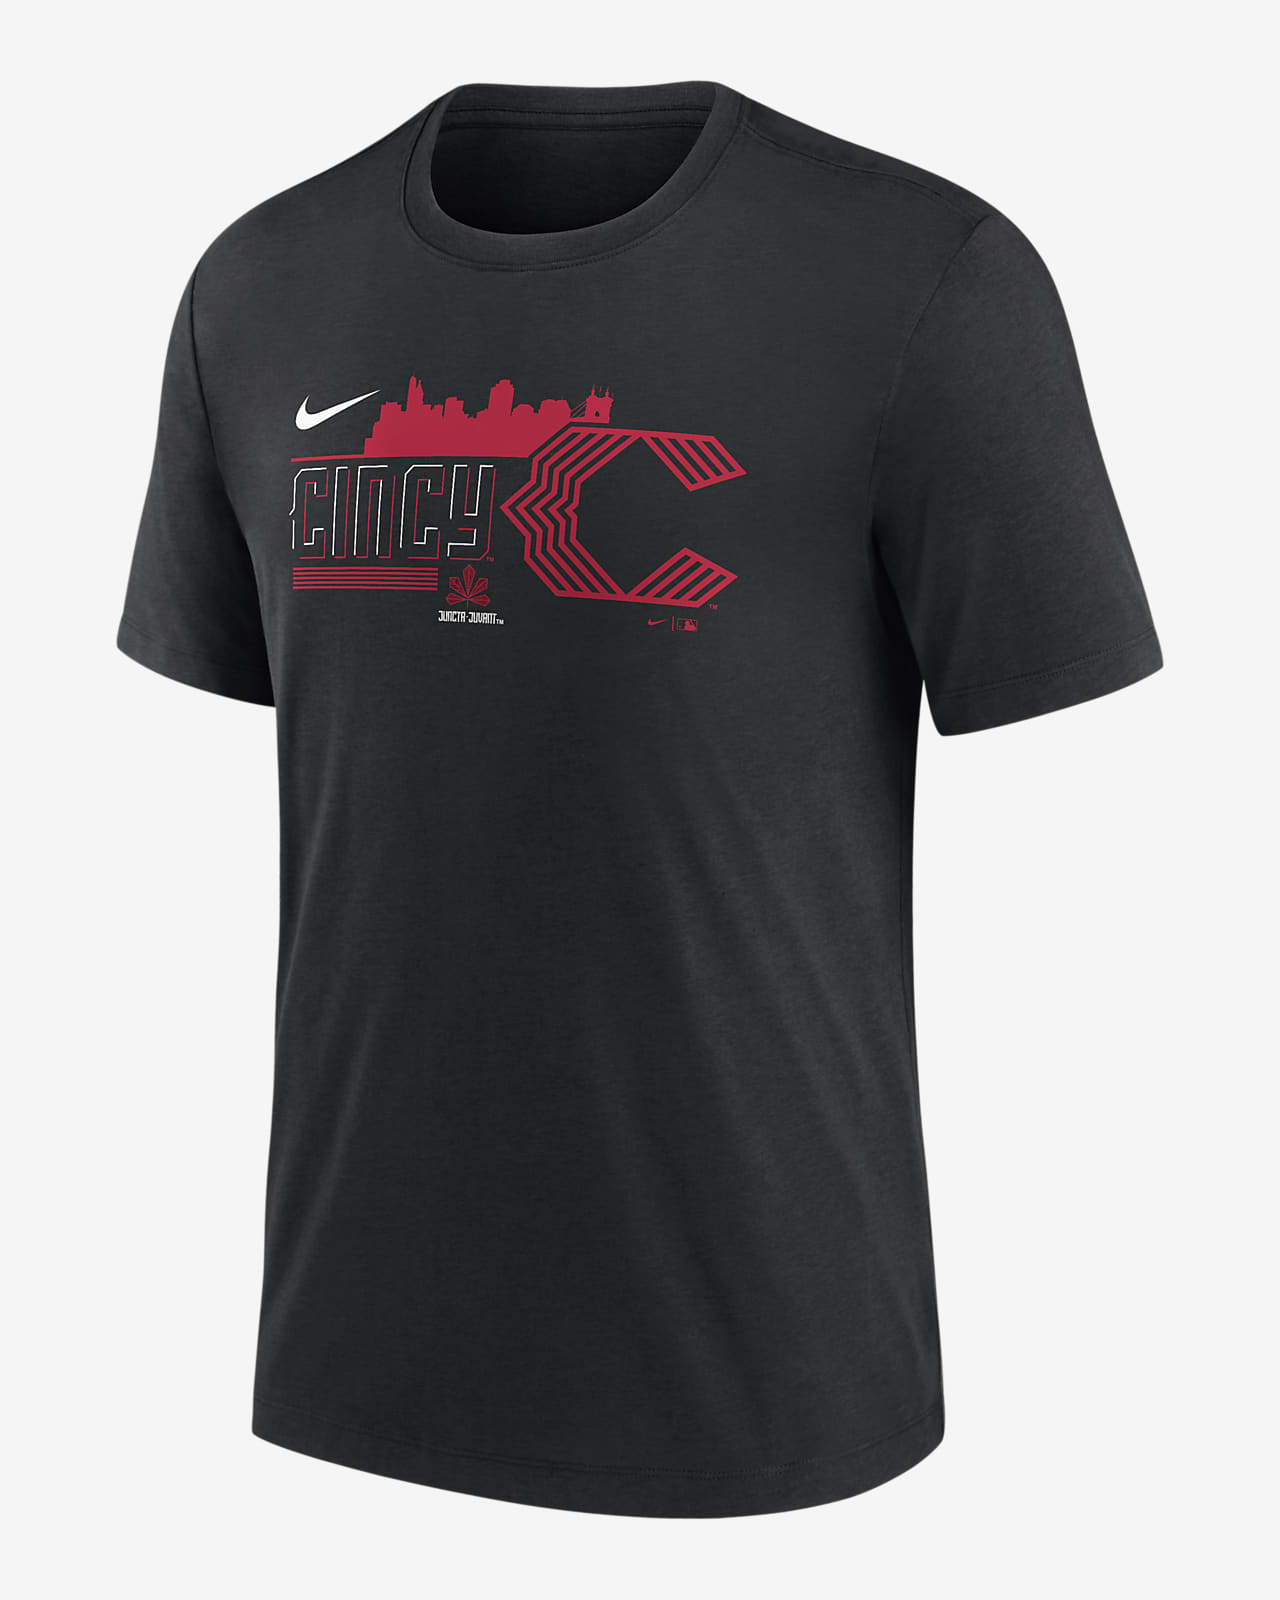 Nike Cincinnati Reds MLB Fan Shop